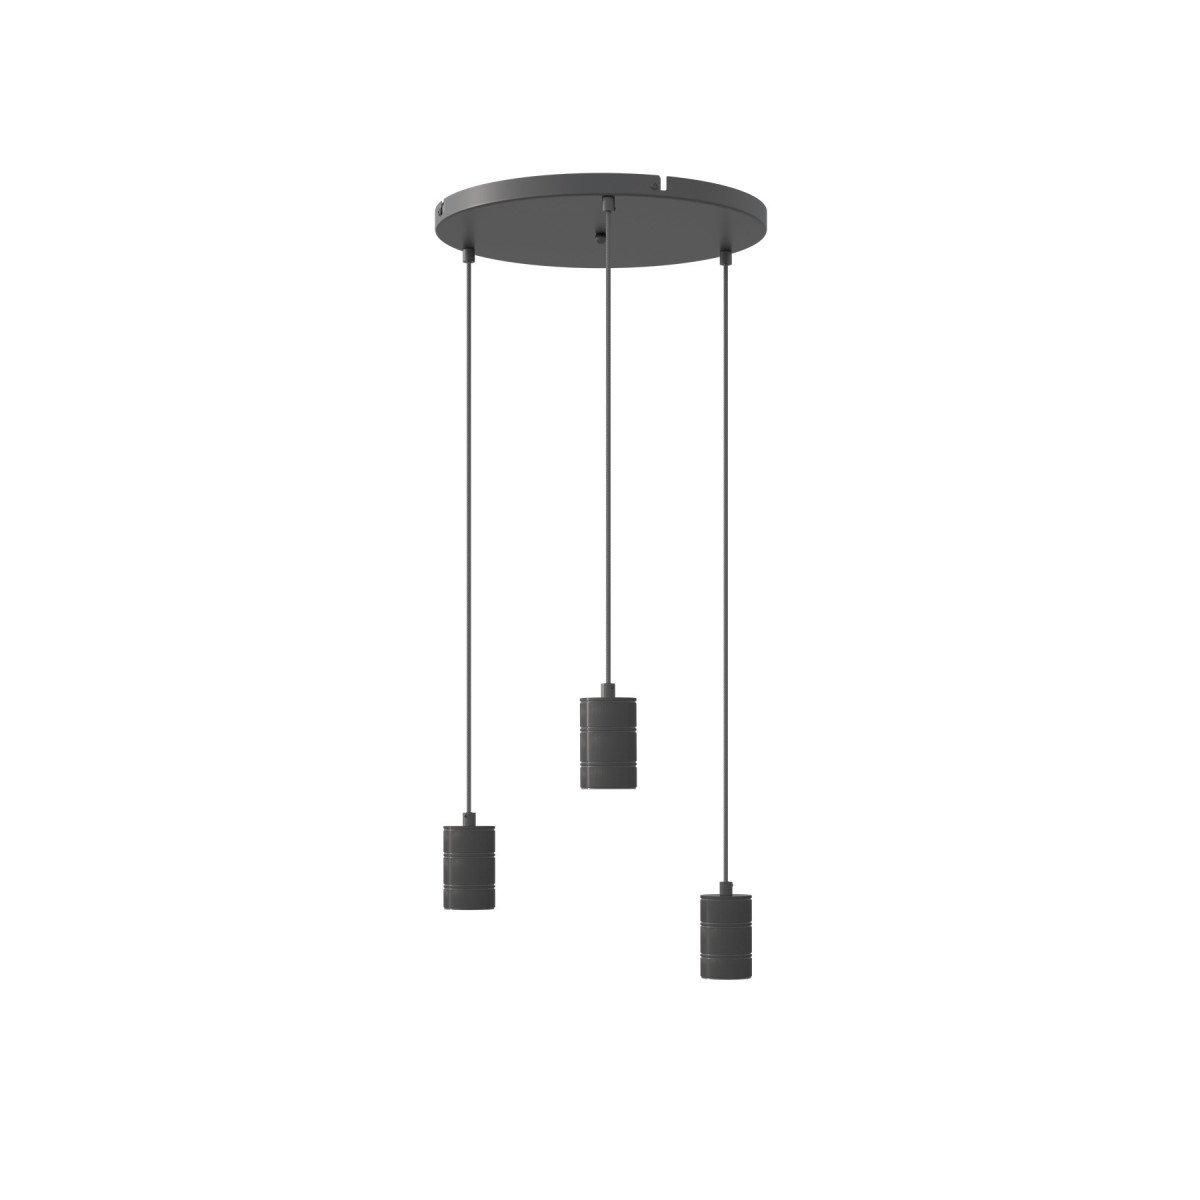 Lampen pendel Calex Multicord set zwart 3x E27